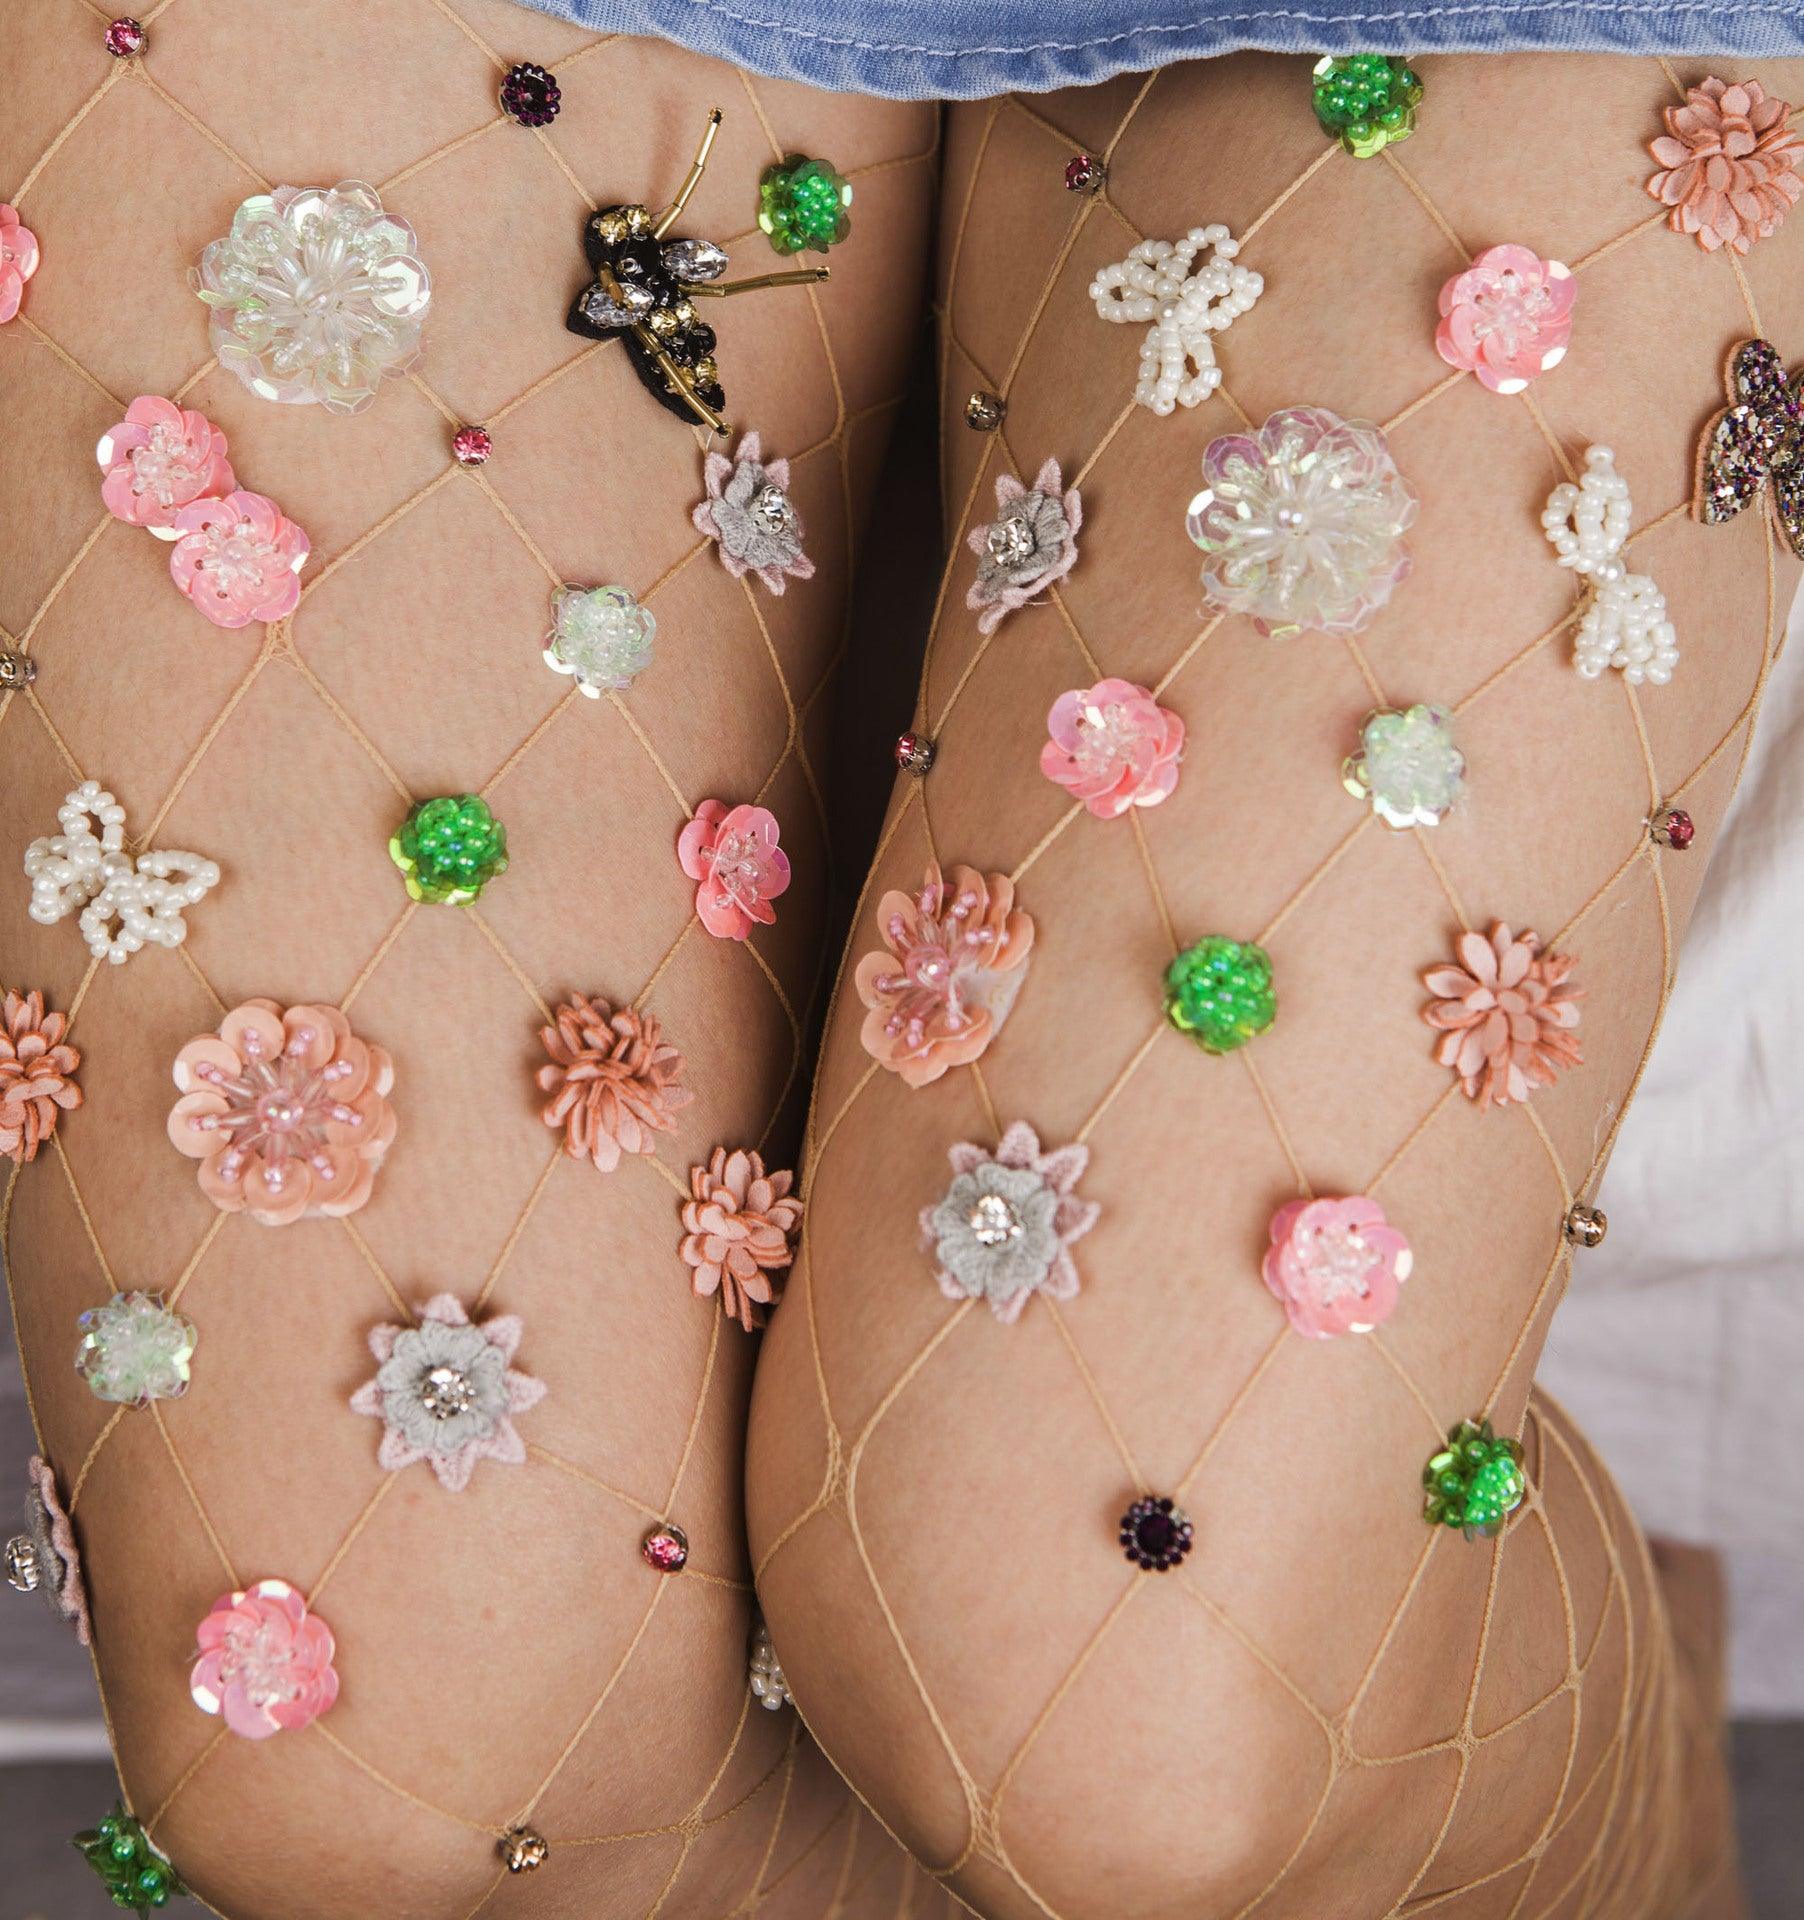 Hot Diamond Stylish Mesh Stockings - ForVanity lingerie accessories, Pantyhose & Stockings, women's lingerie Stockings